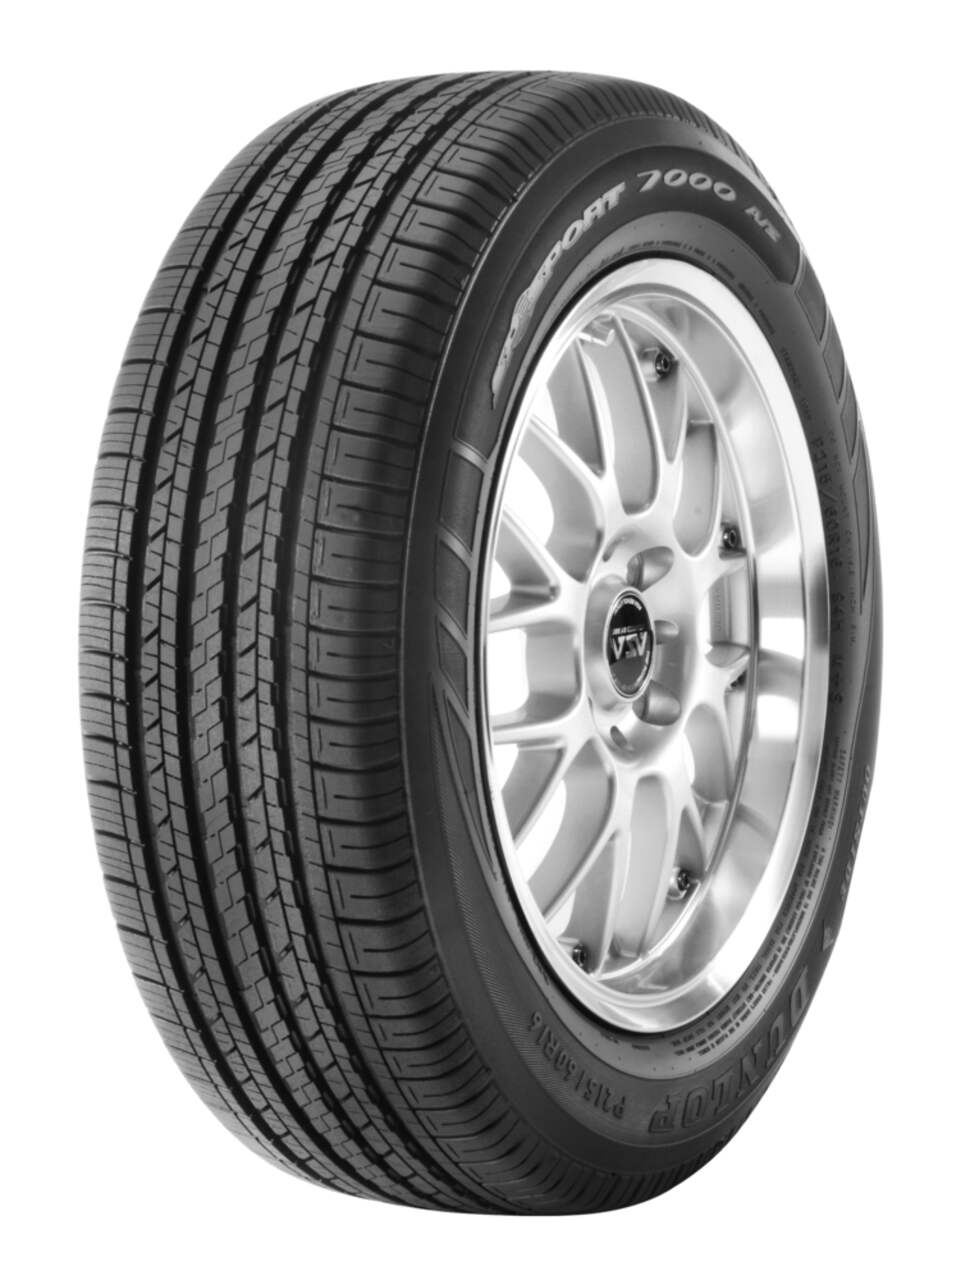 Dunlop SP Sport 7000 A/S Performance Tire For Passenger & CUV